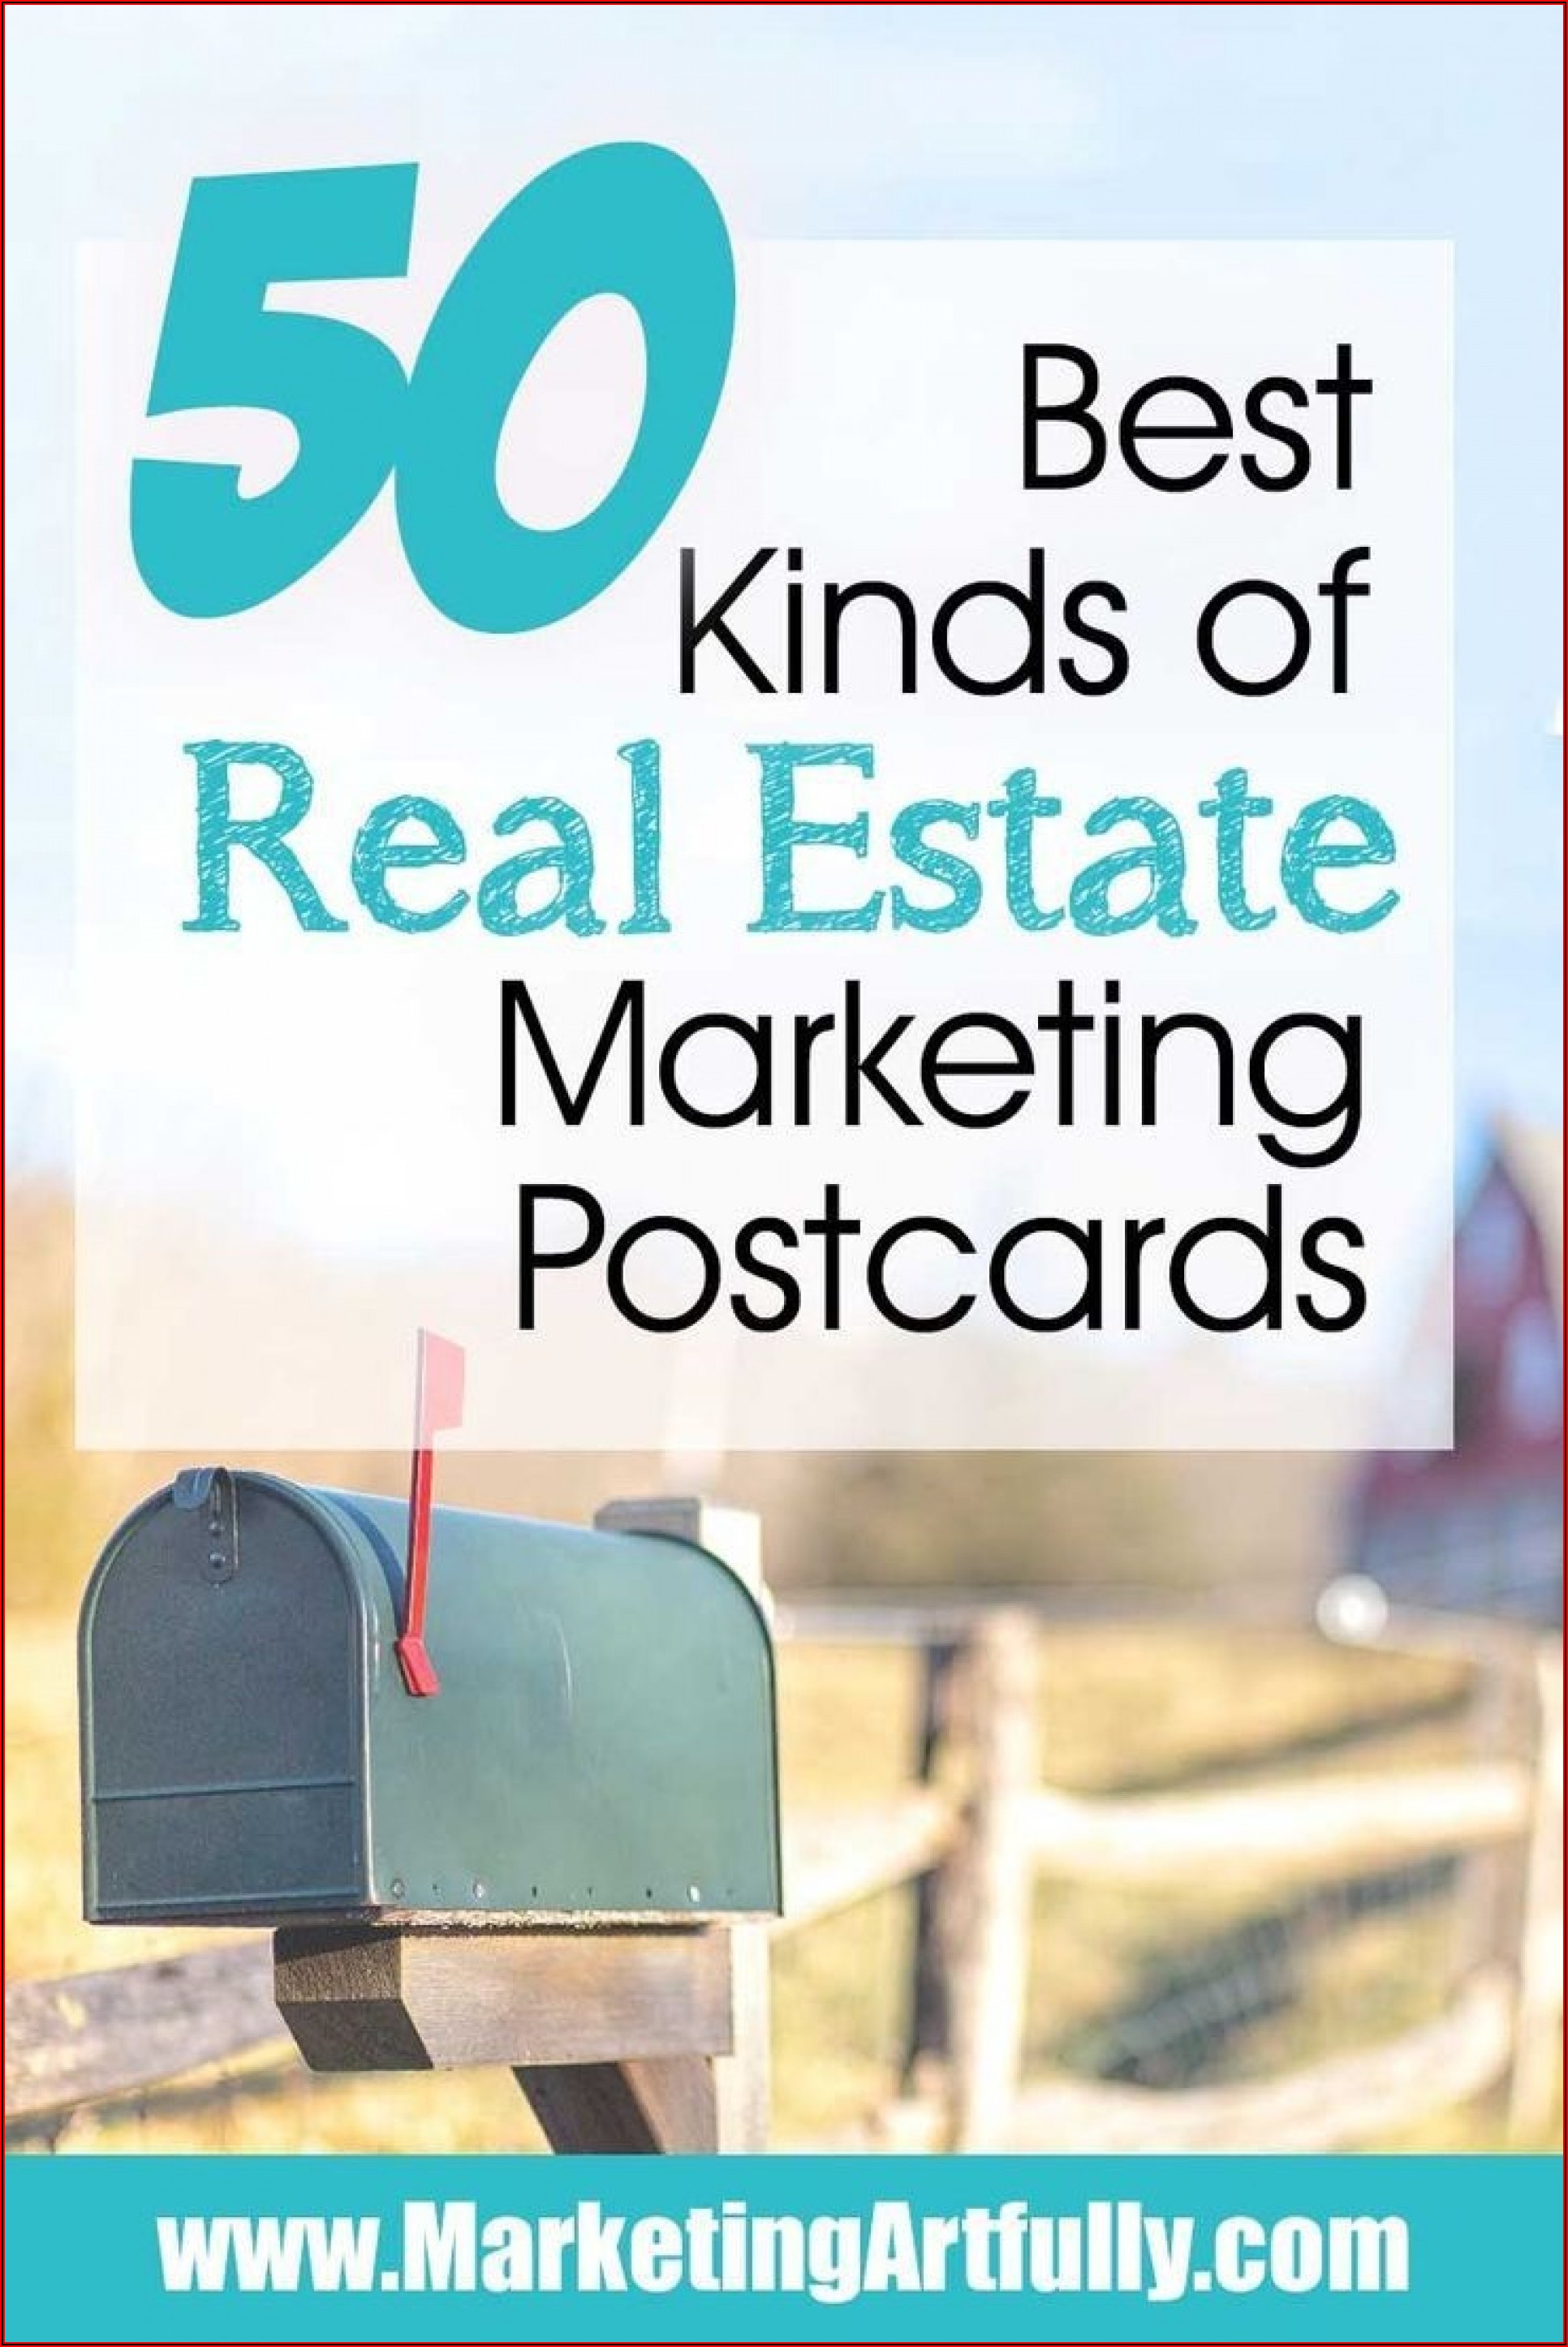 Marketing Postcard Templates